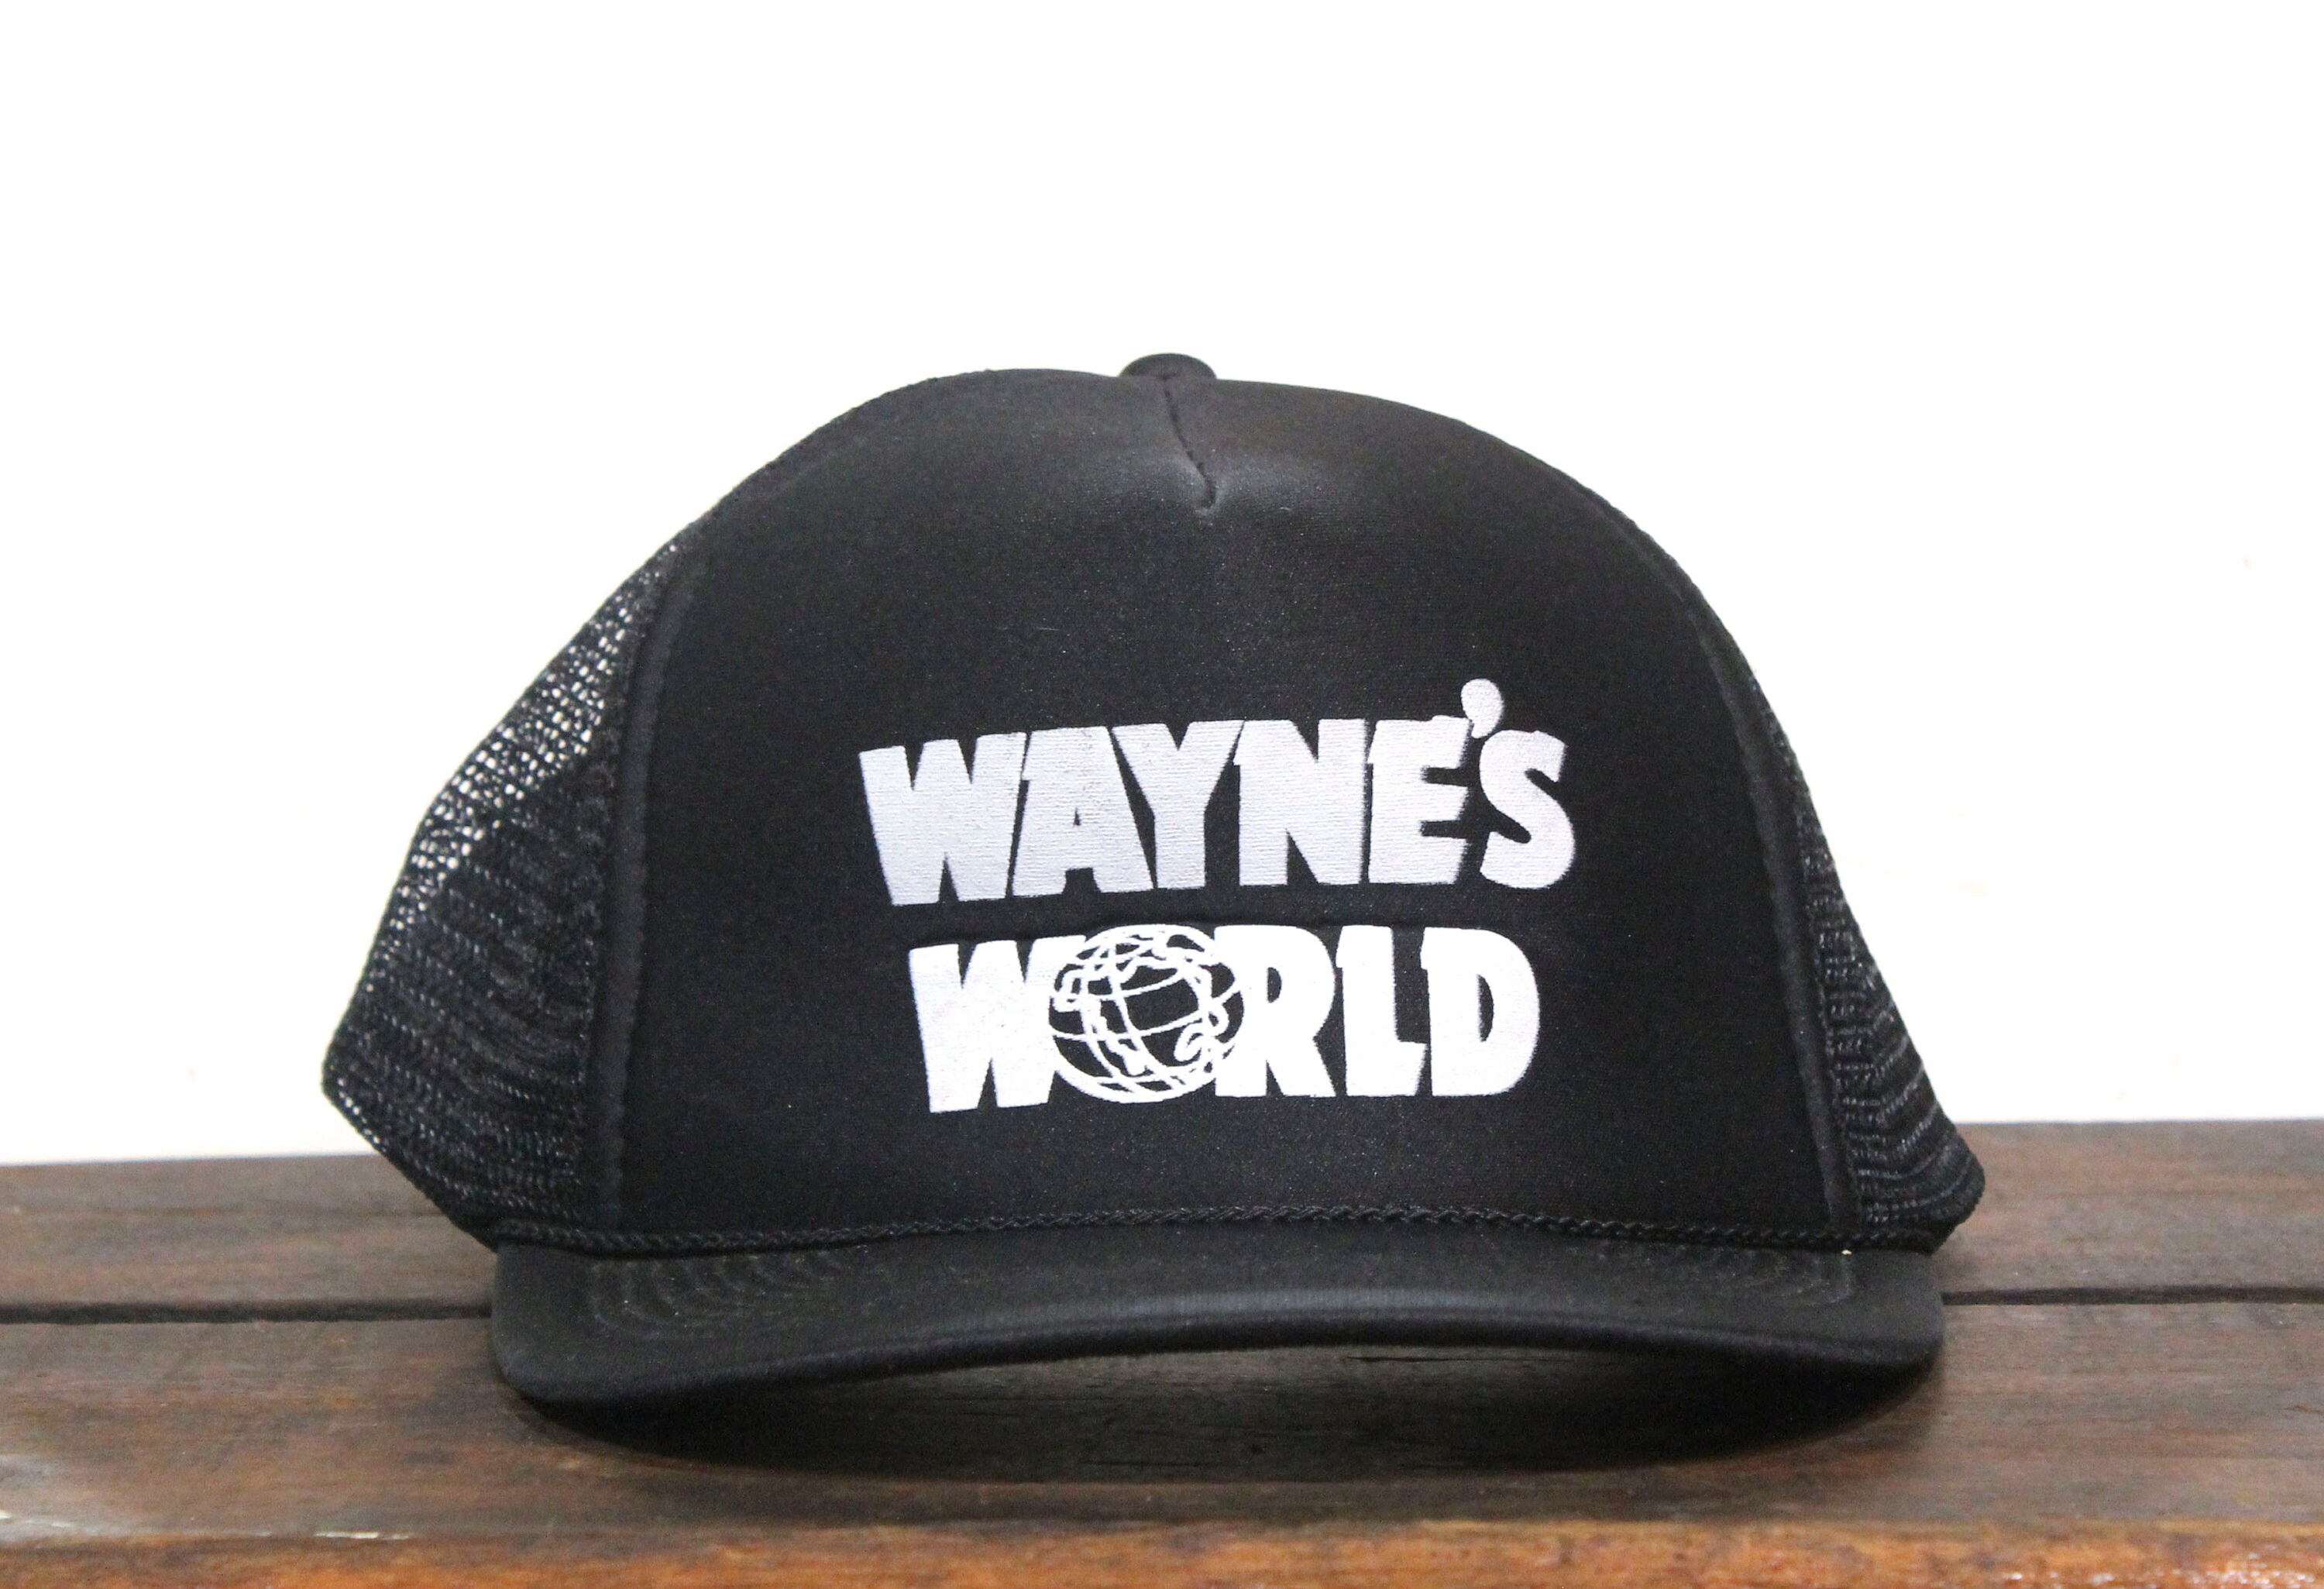 WAYNE'S WORLD HALLOWEEN COSTUME INCLUDES T-SHIRT & TRUCKER HAT FUNNY 90'S RETRO 